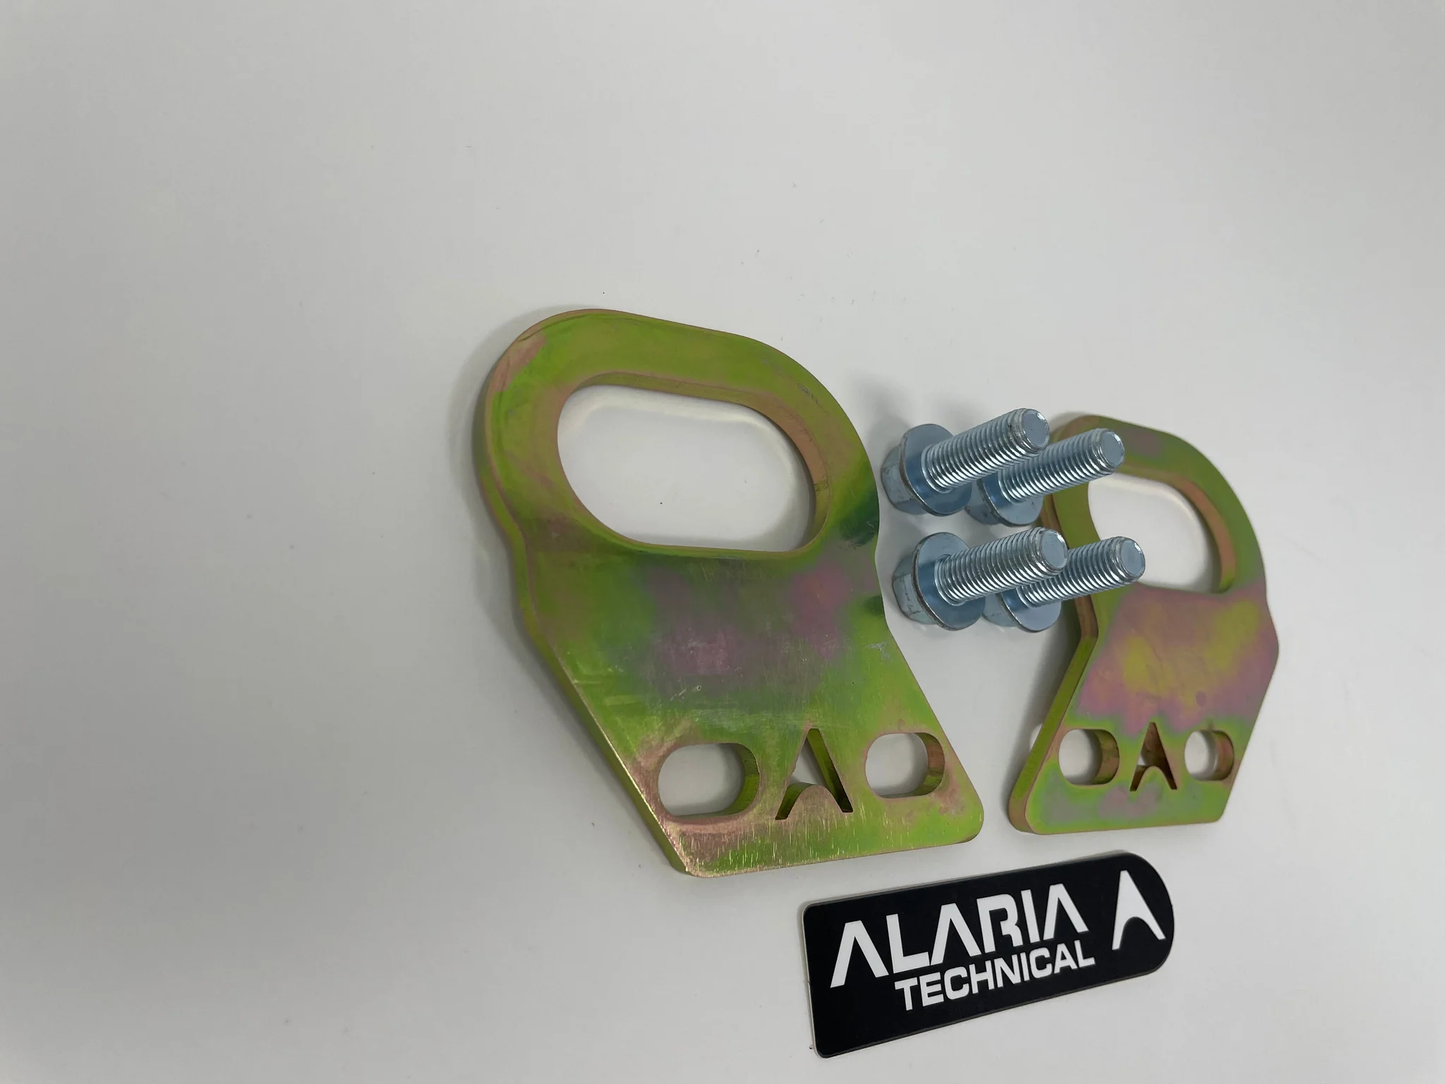 Alaria - Nissan S14 Front Tie Down Brackets